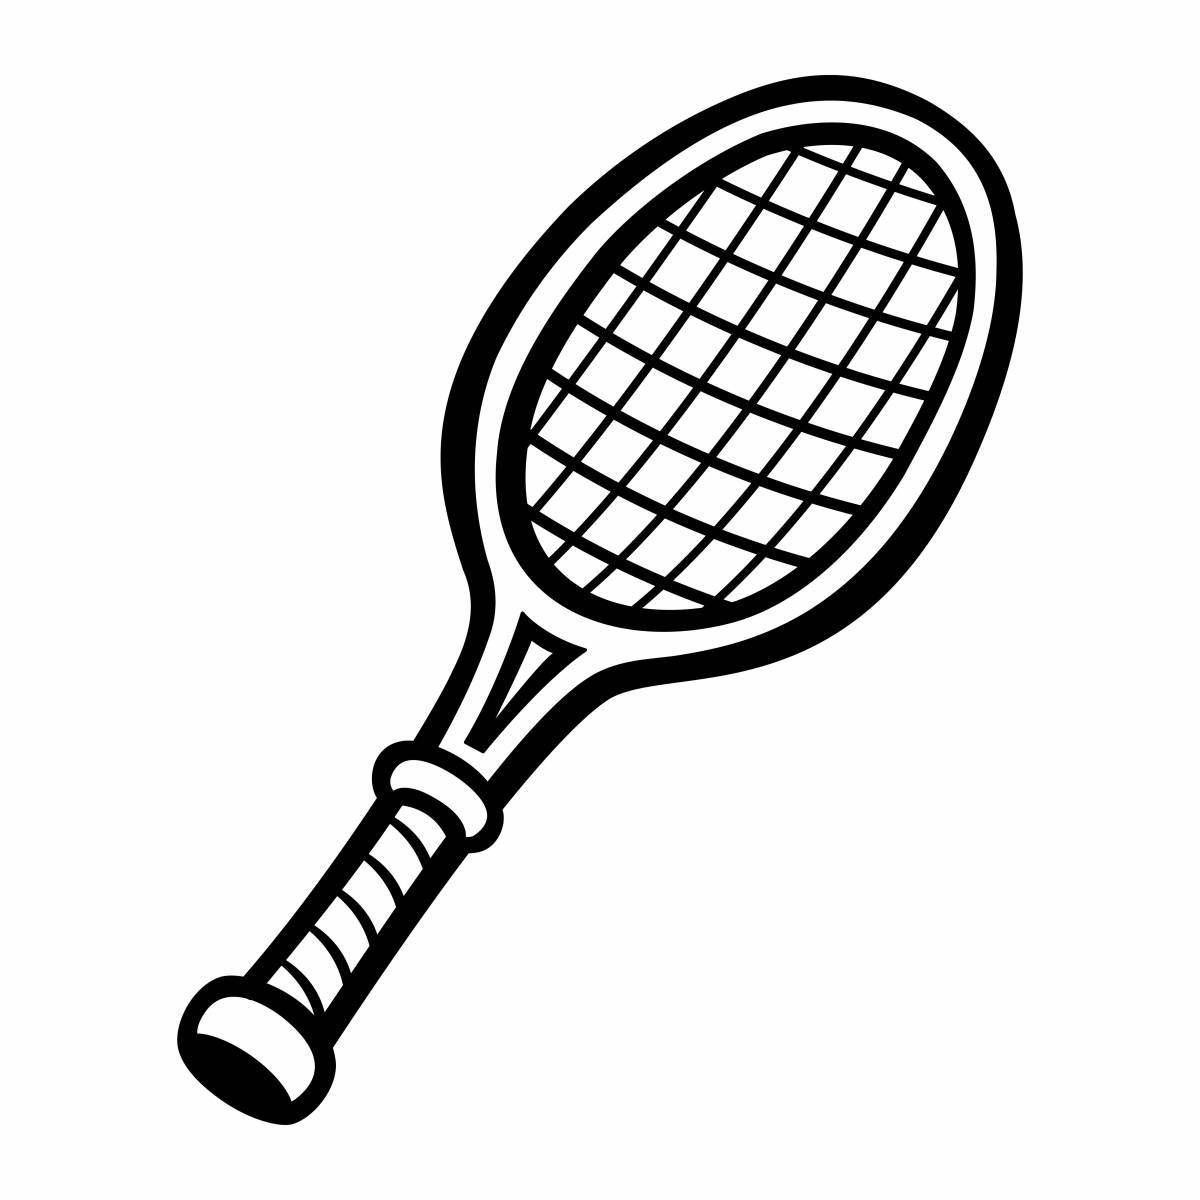 Coloring page enchanting tennis racket